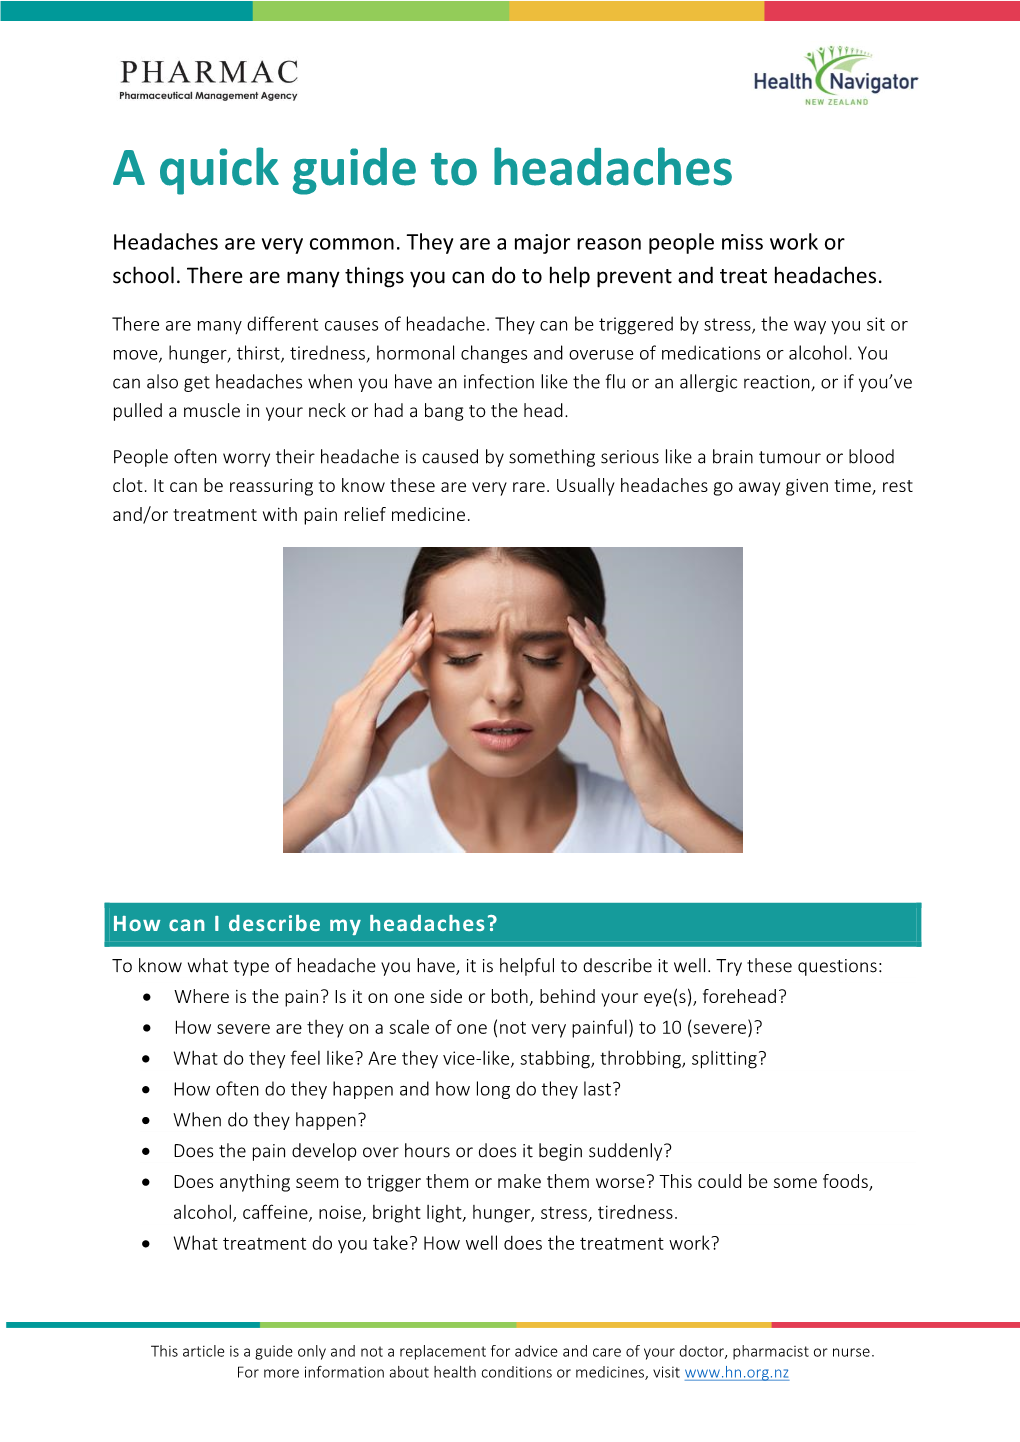 A Quick Guide to Headaches